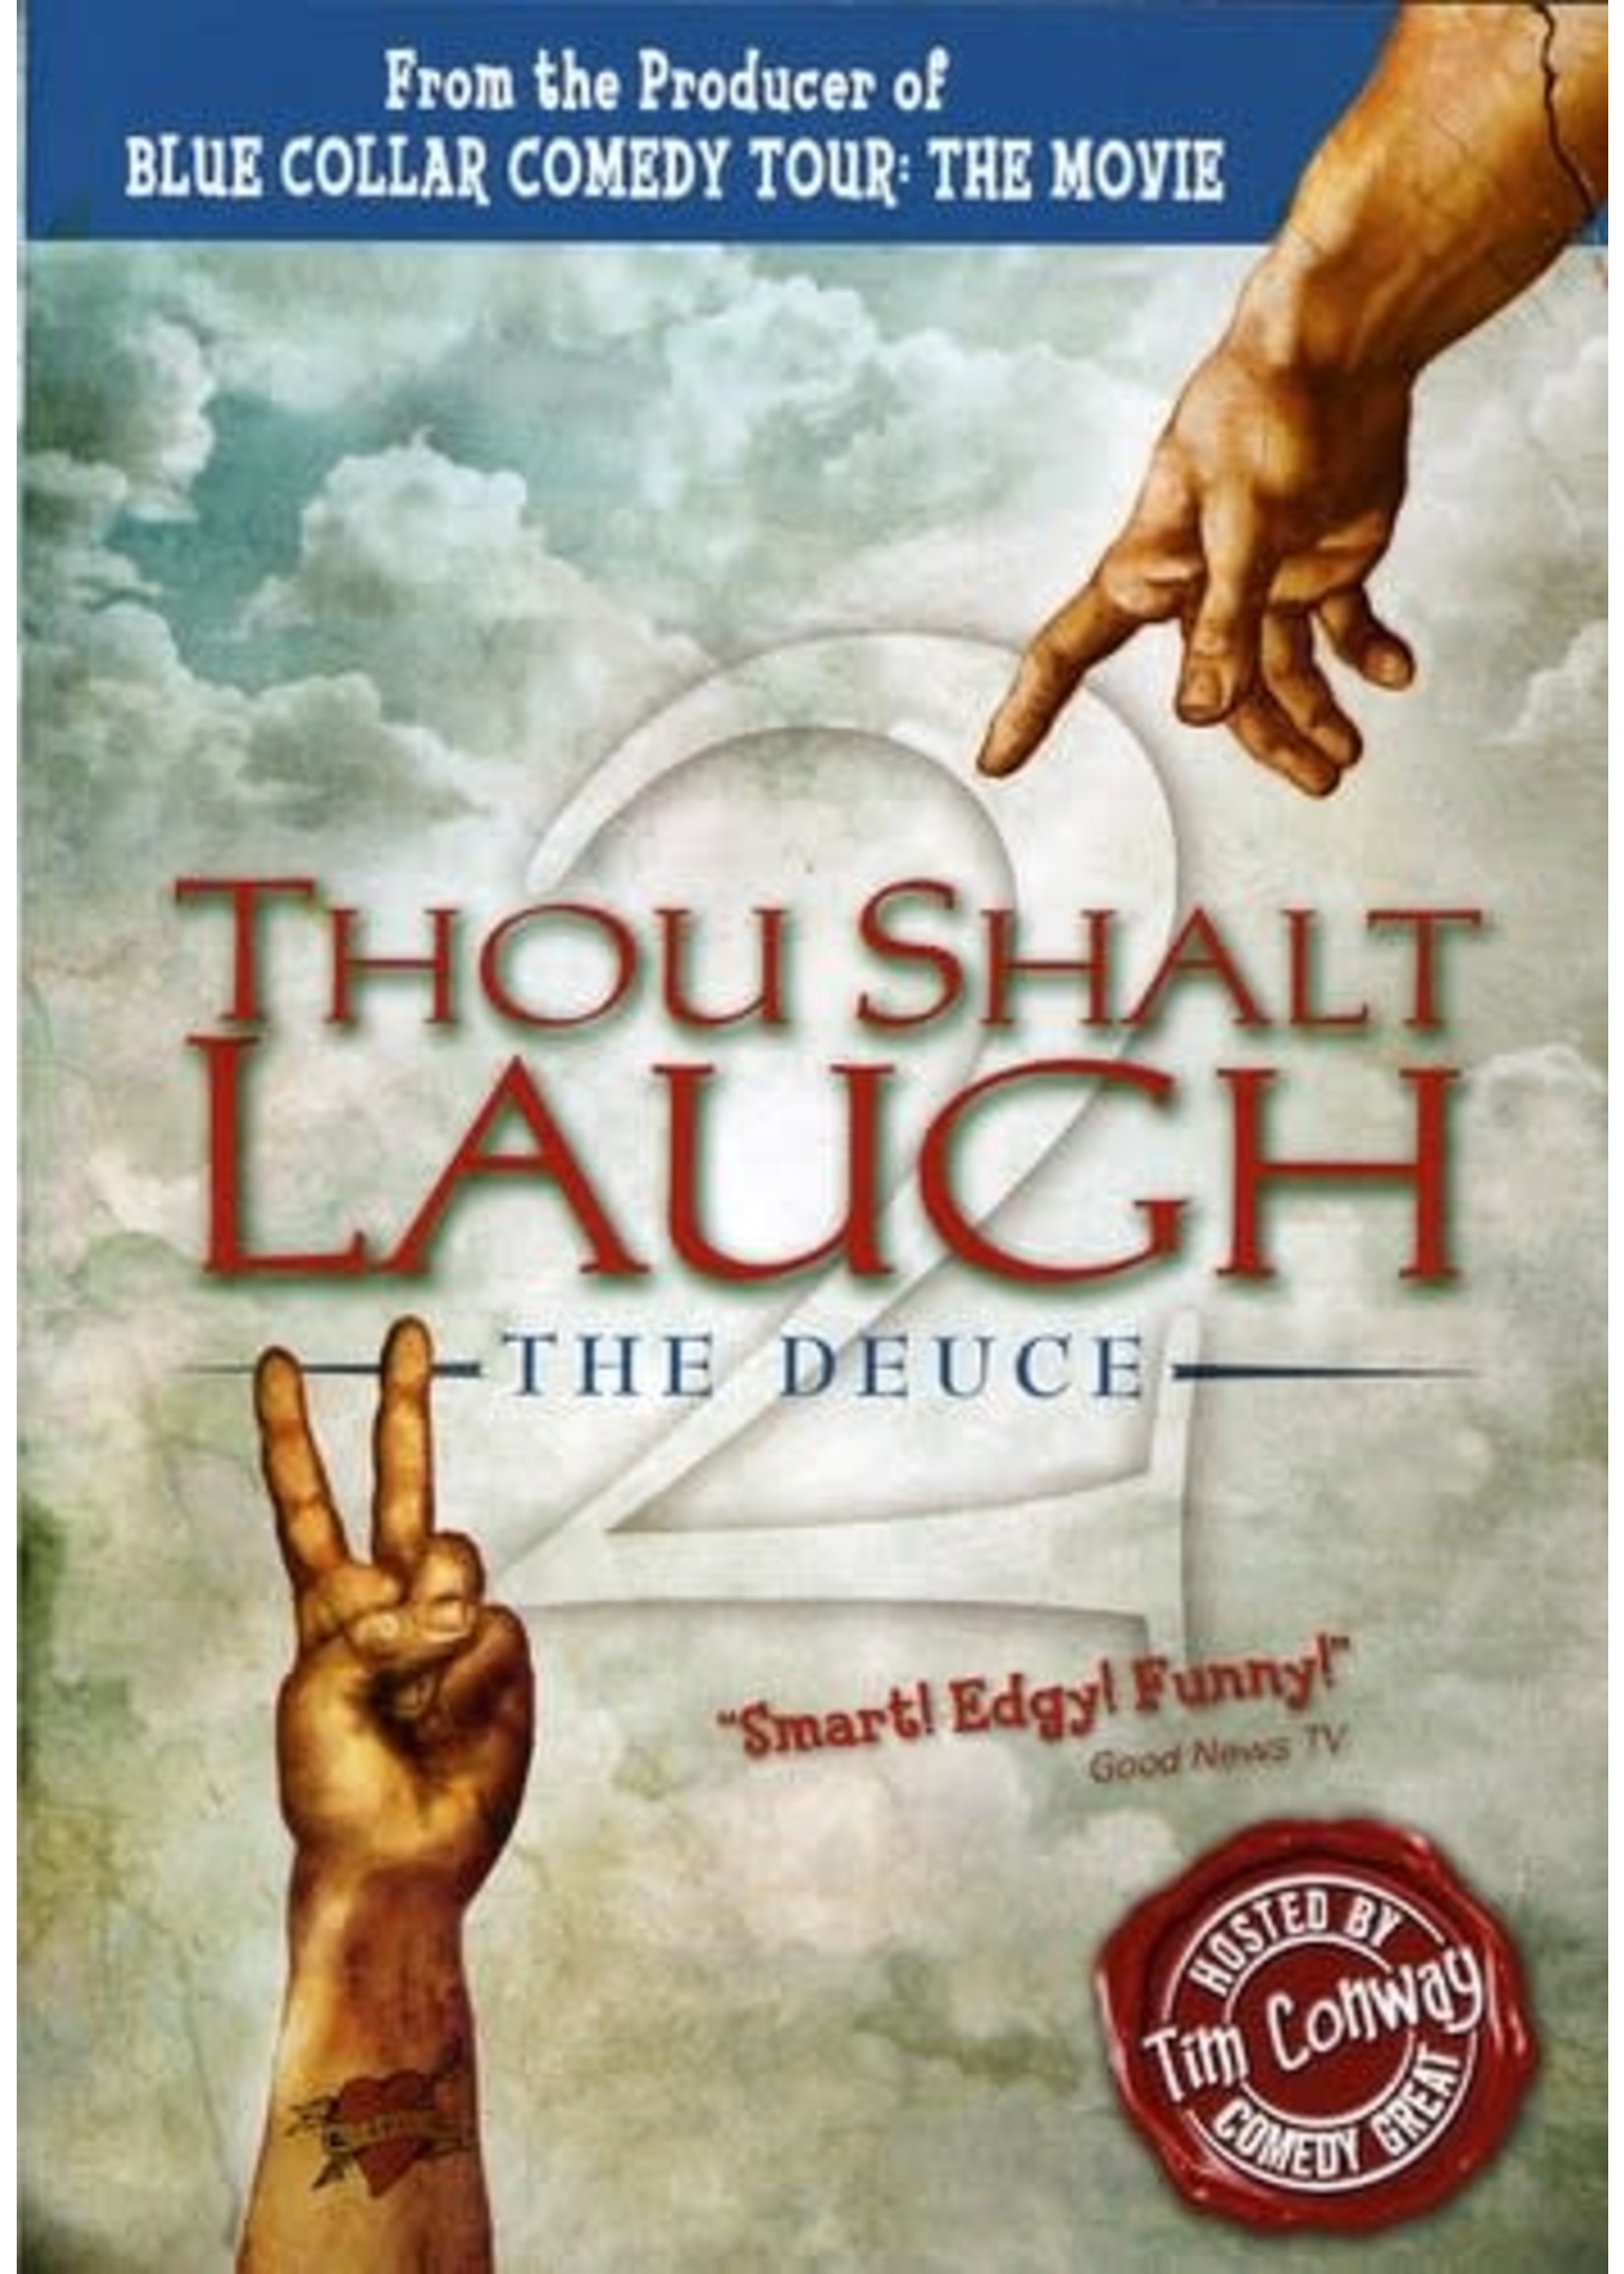 Thou Shalt Laugh: the Deuce [DVD]